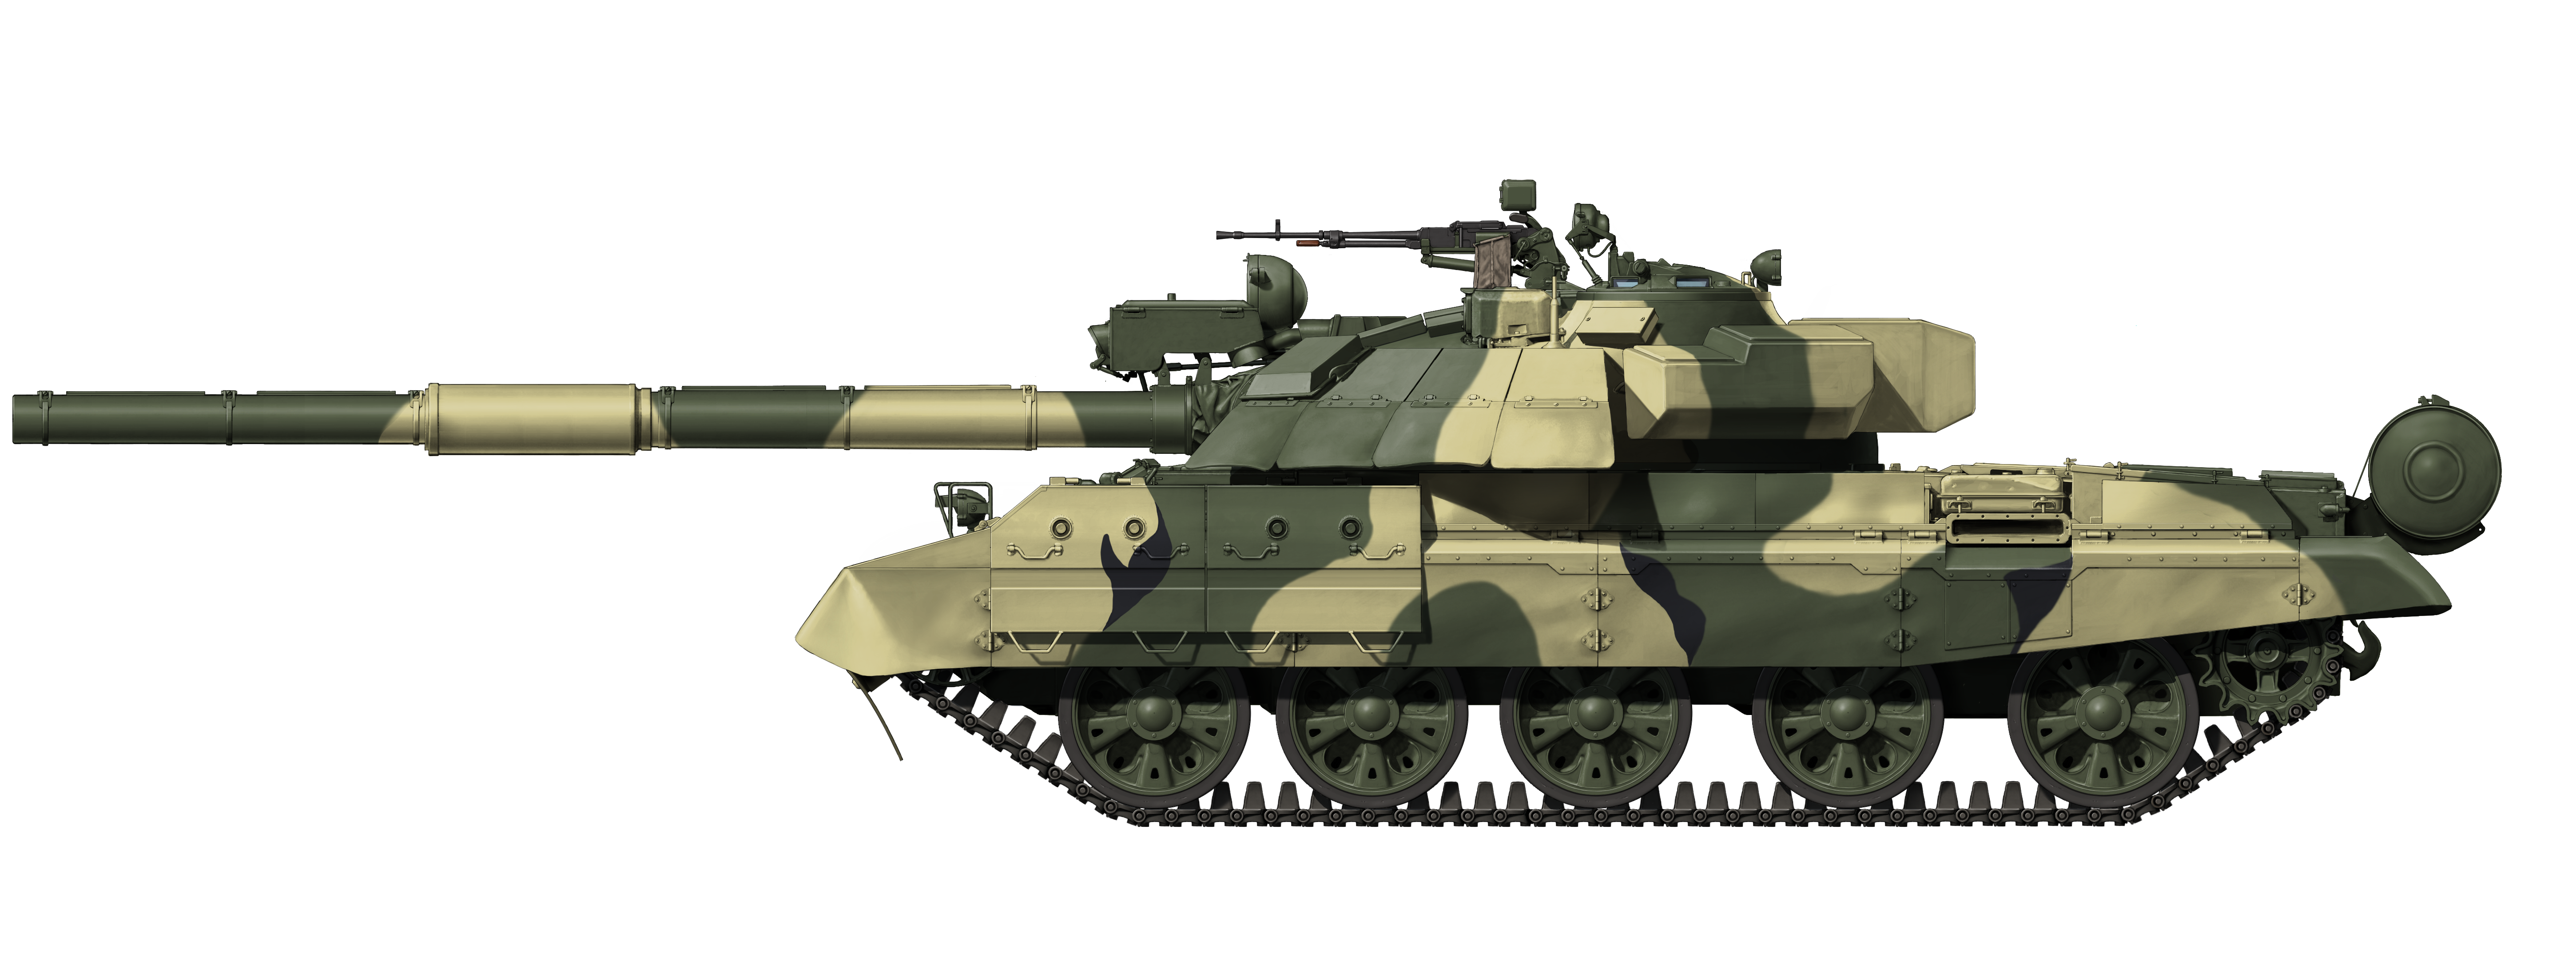 Tank Encyclopedia - The Online Tank Museum